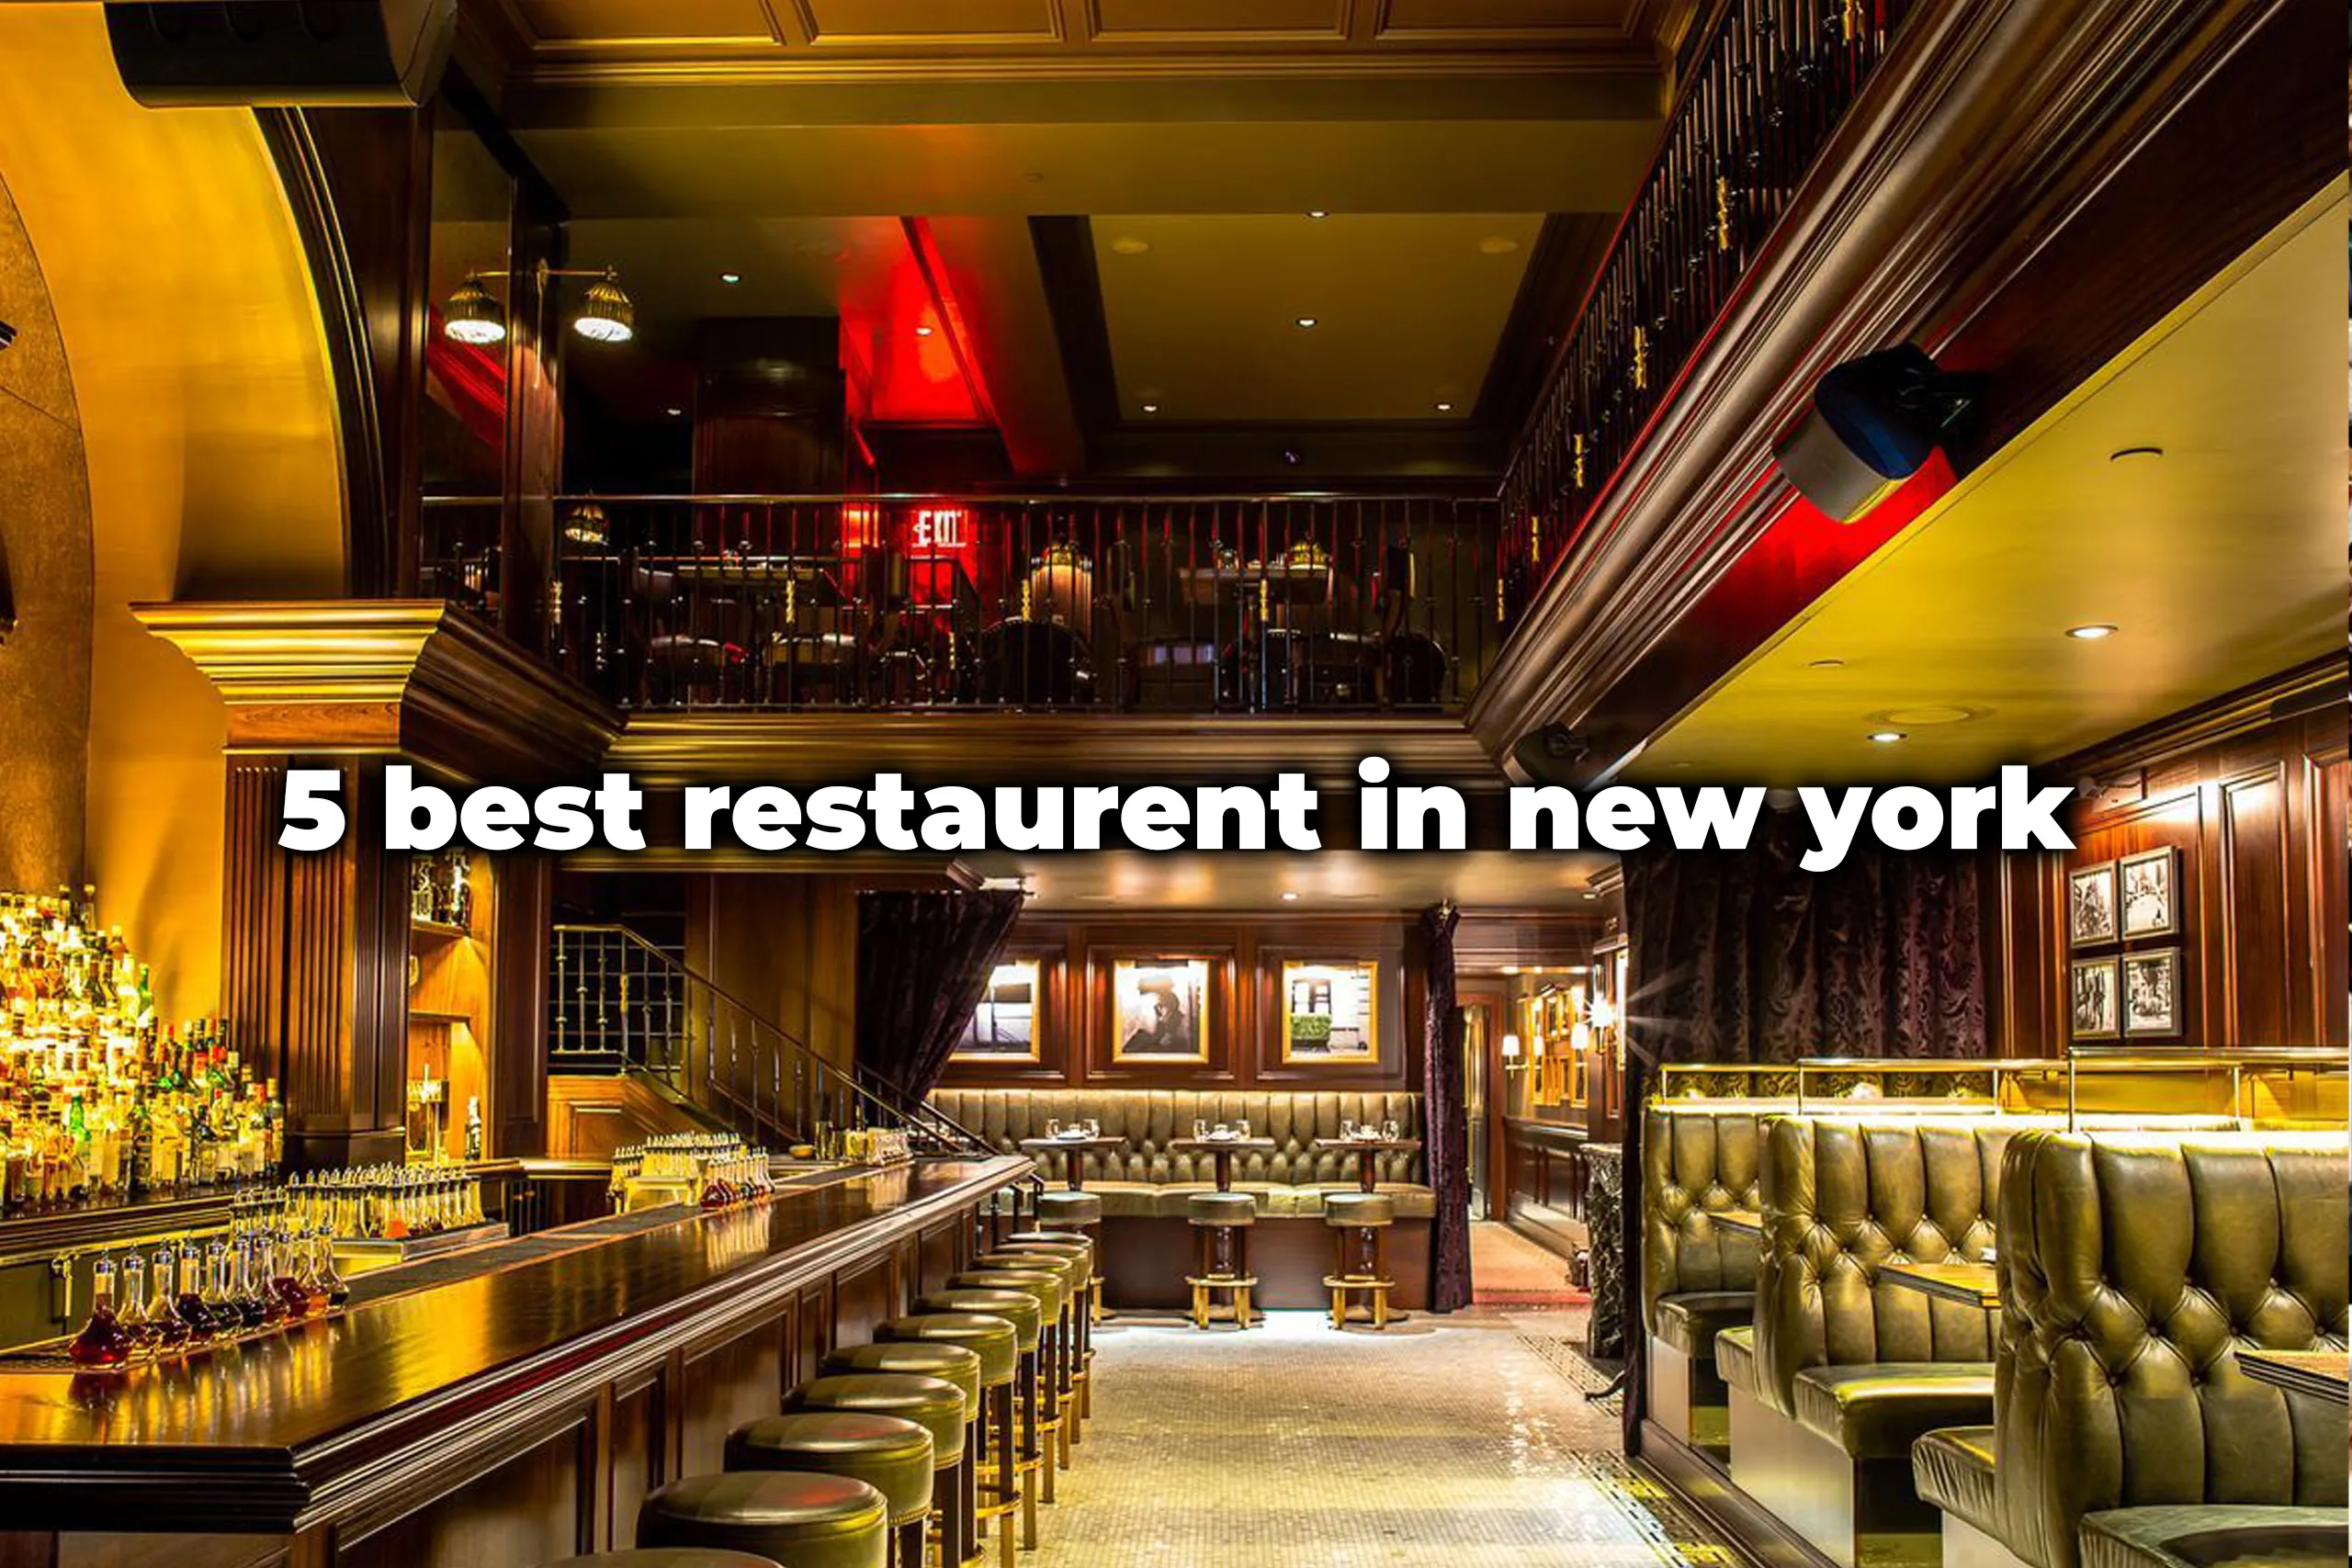 5 Best Restaurant in New York